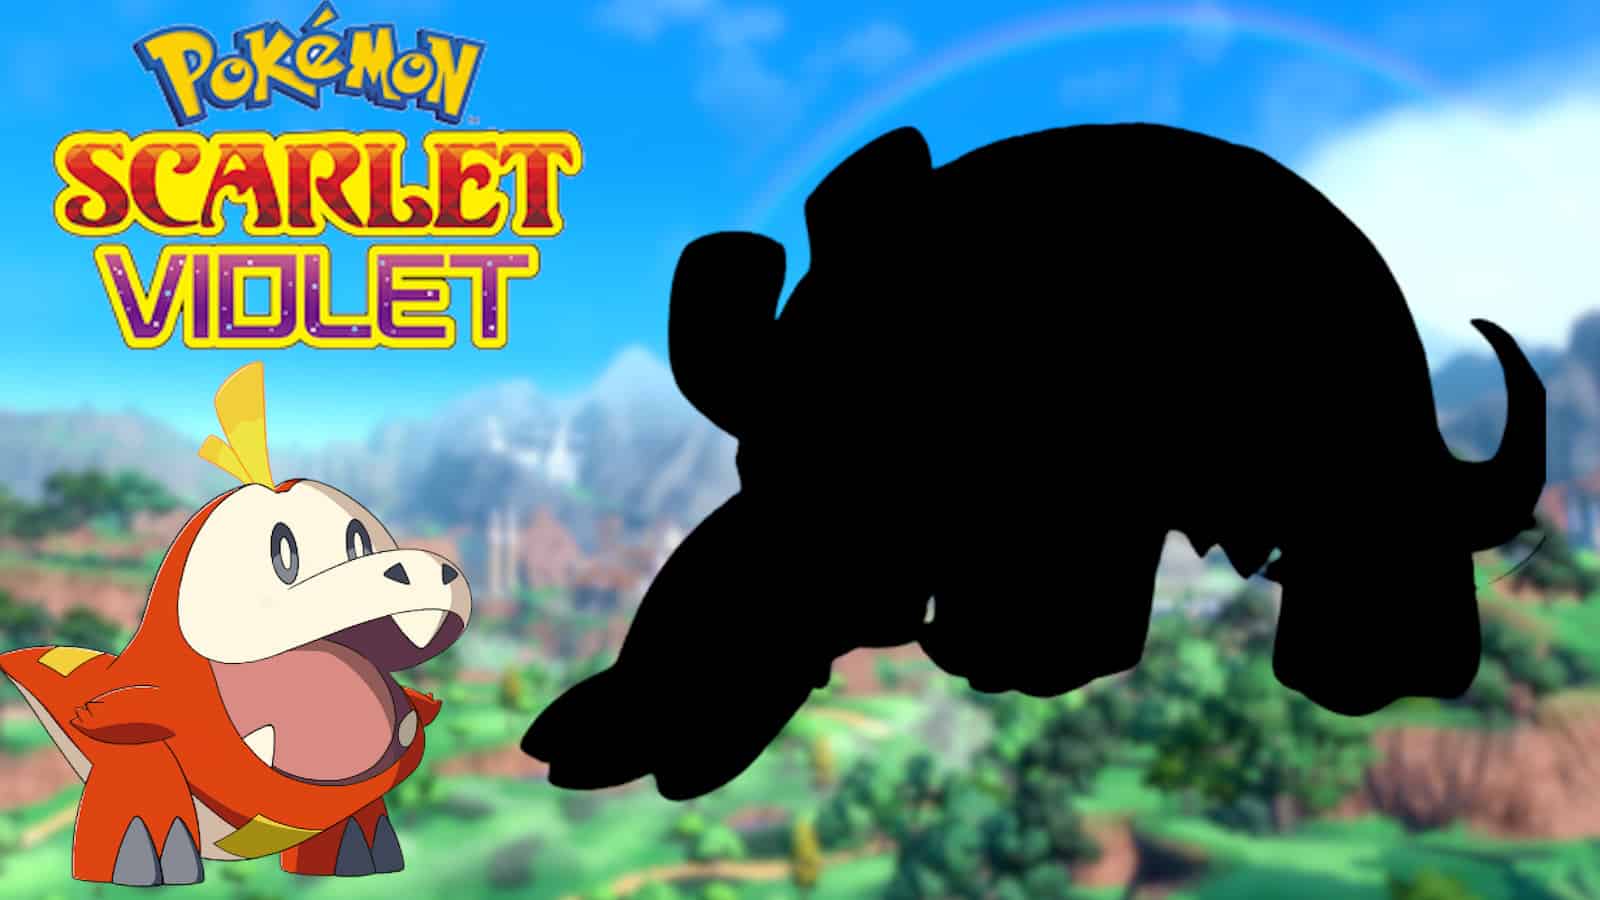 Pokemon Scarlet and Violet Leaks reveal final evolutions of starters